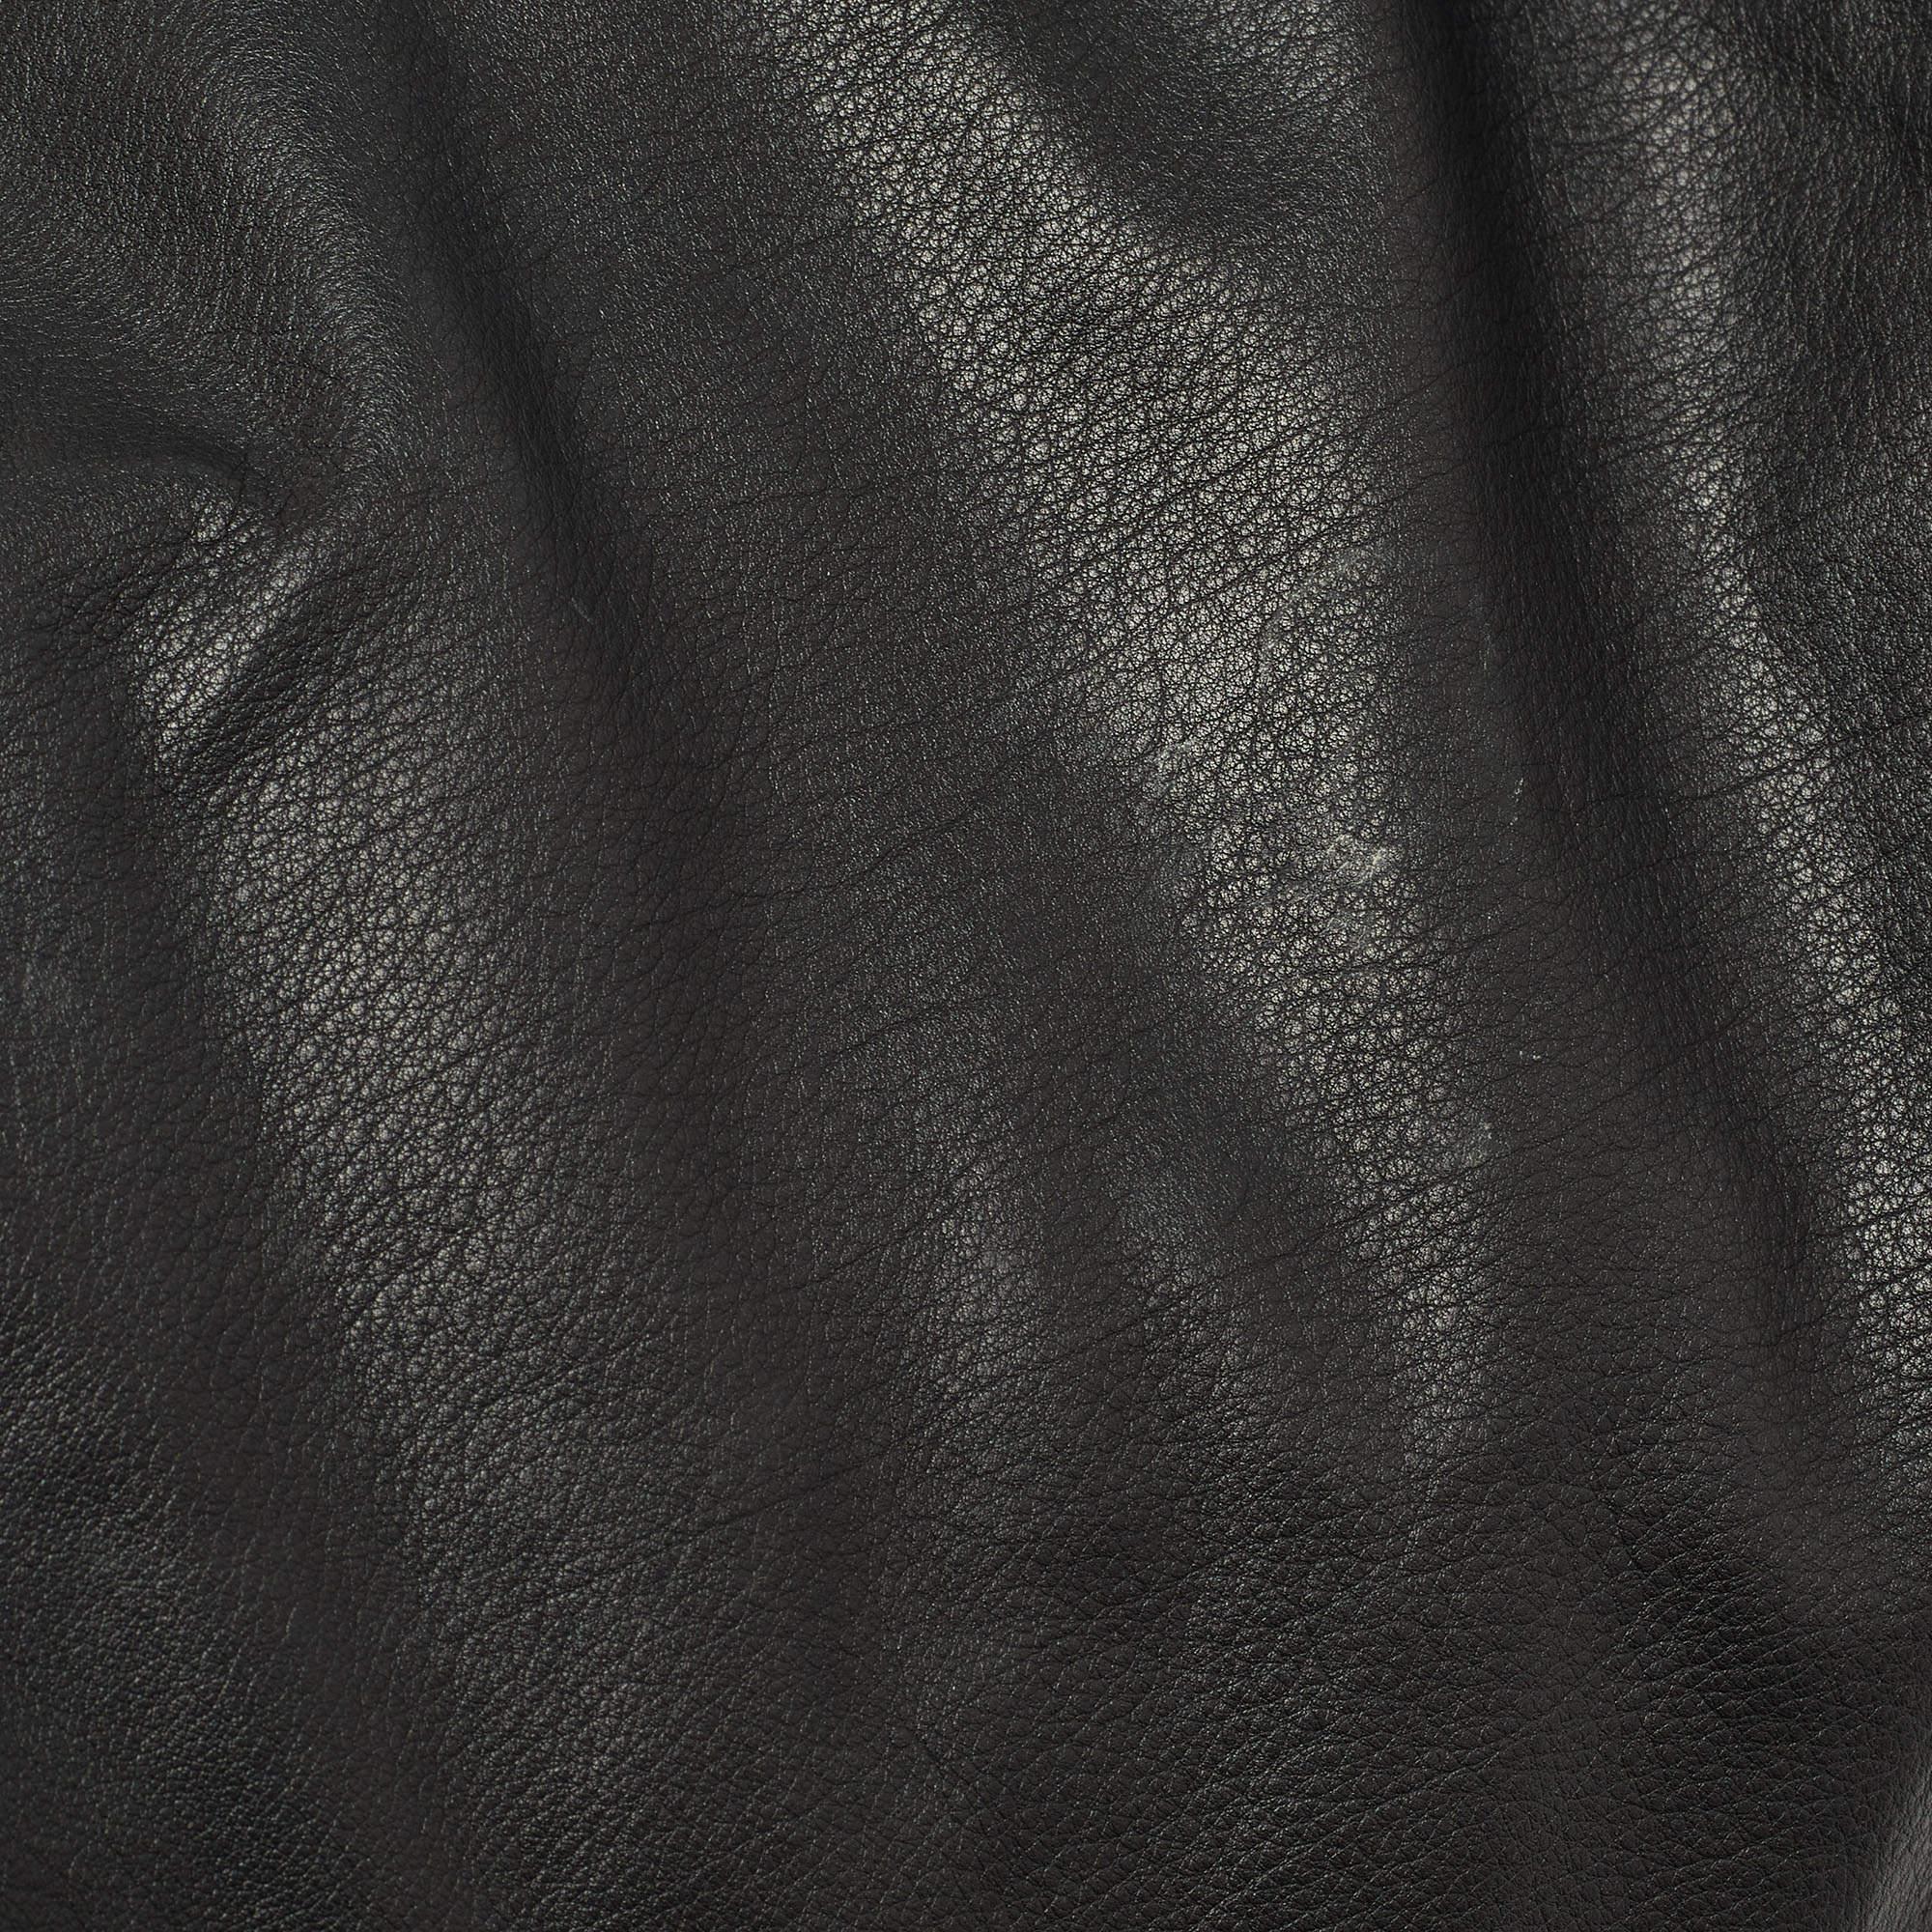 Bottega Veneta Black Lasercut Leather Floral Applique Hobo For Sale 1